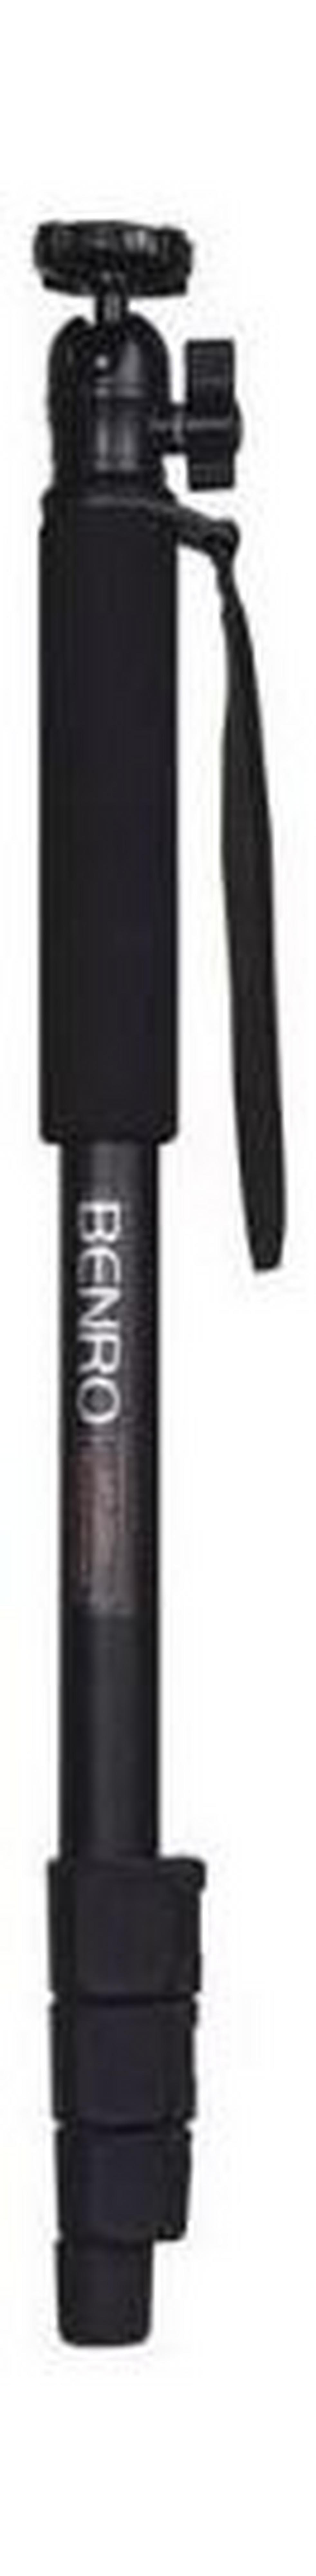 Benro Alluminum Monopod (A25FBRO) - Black